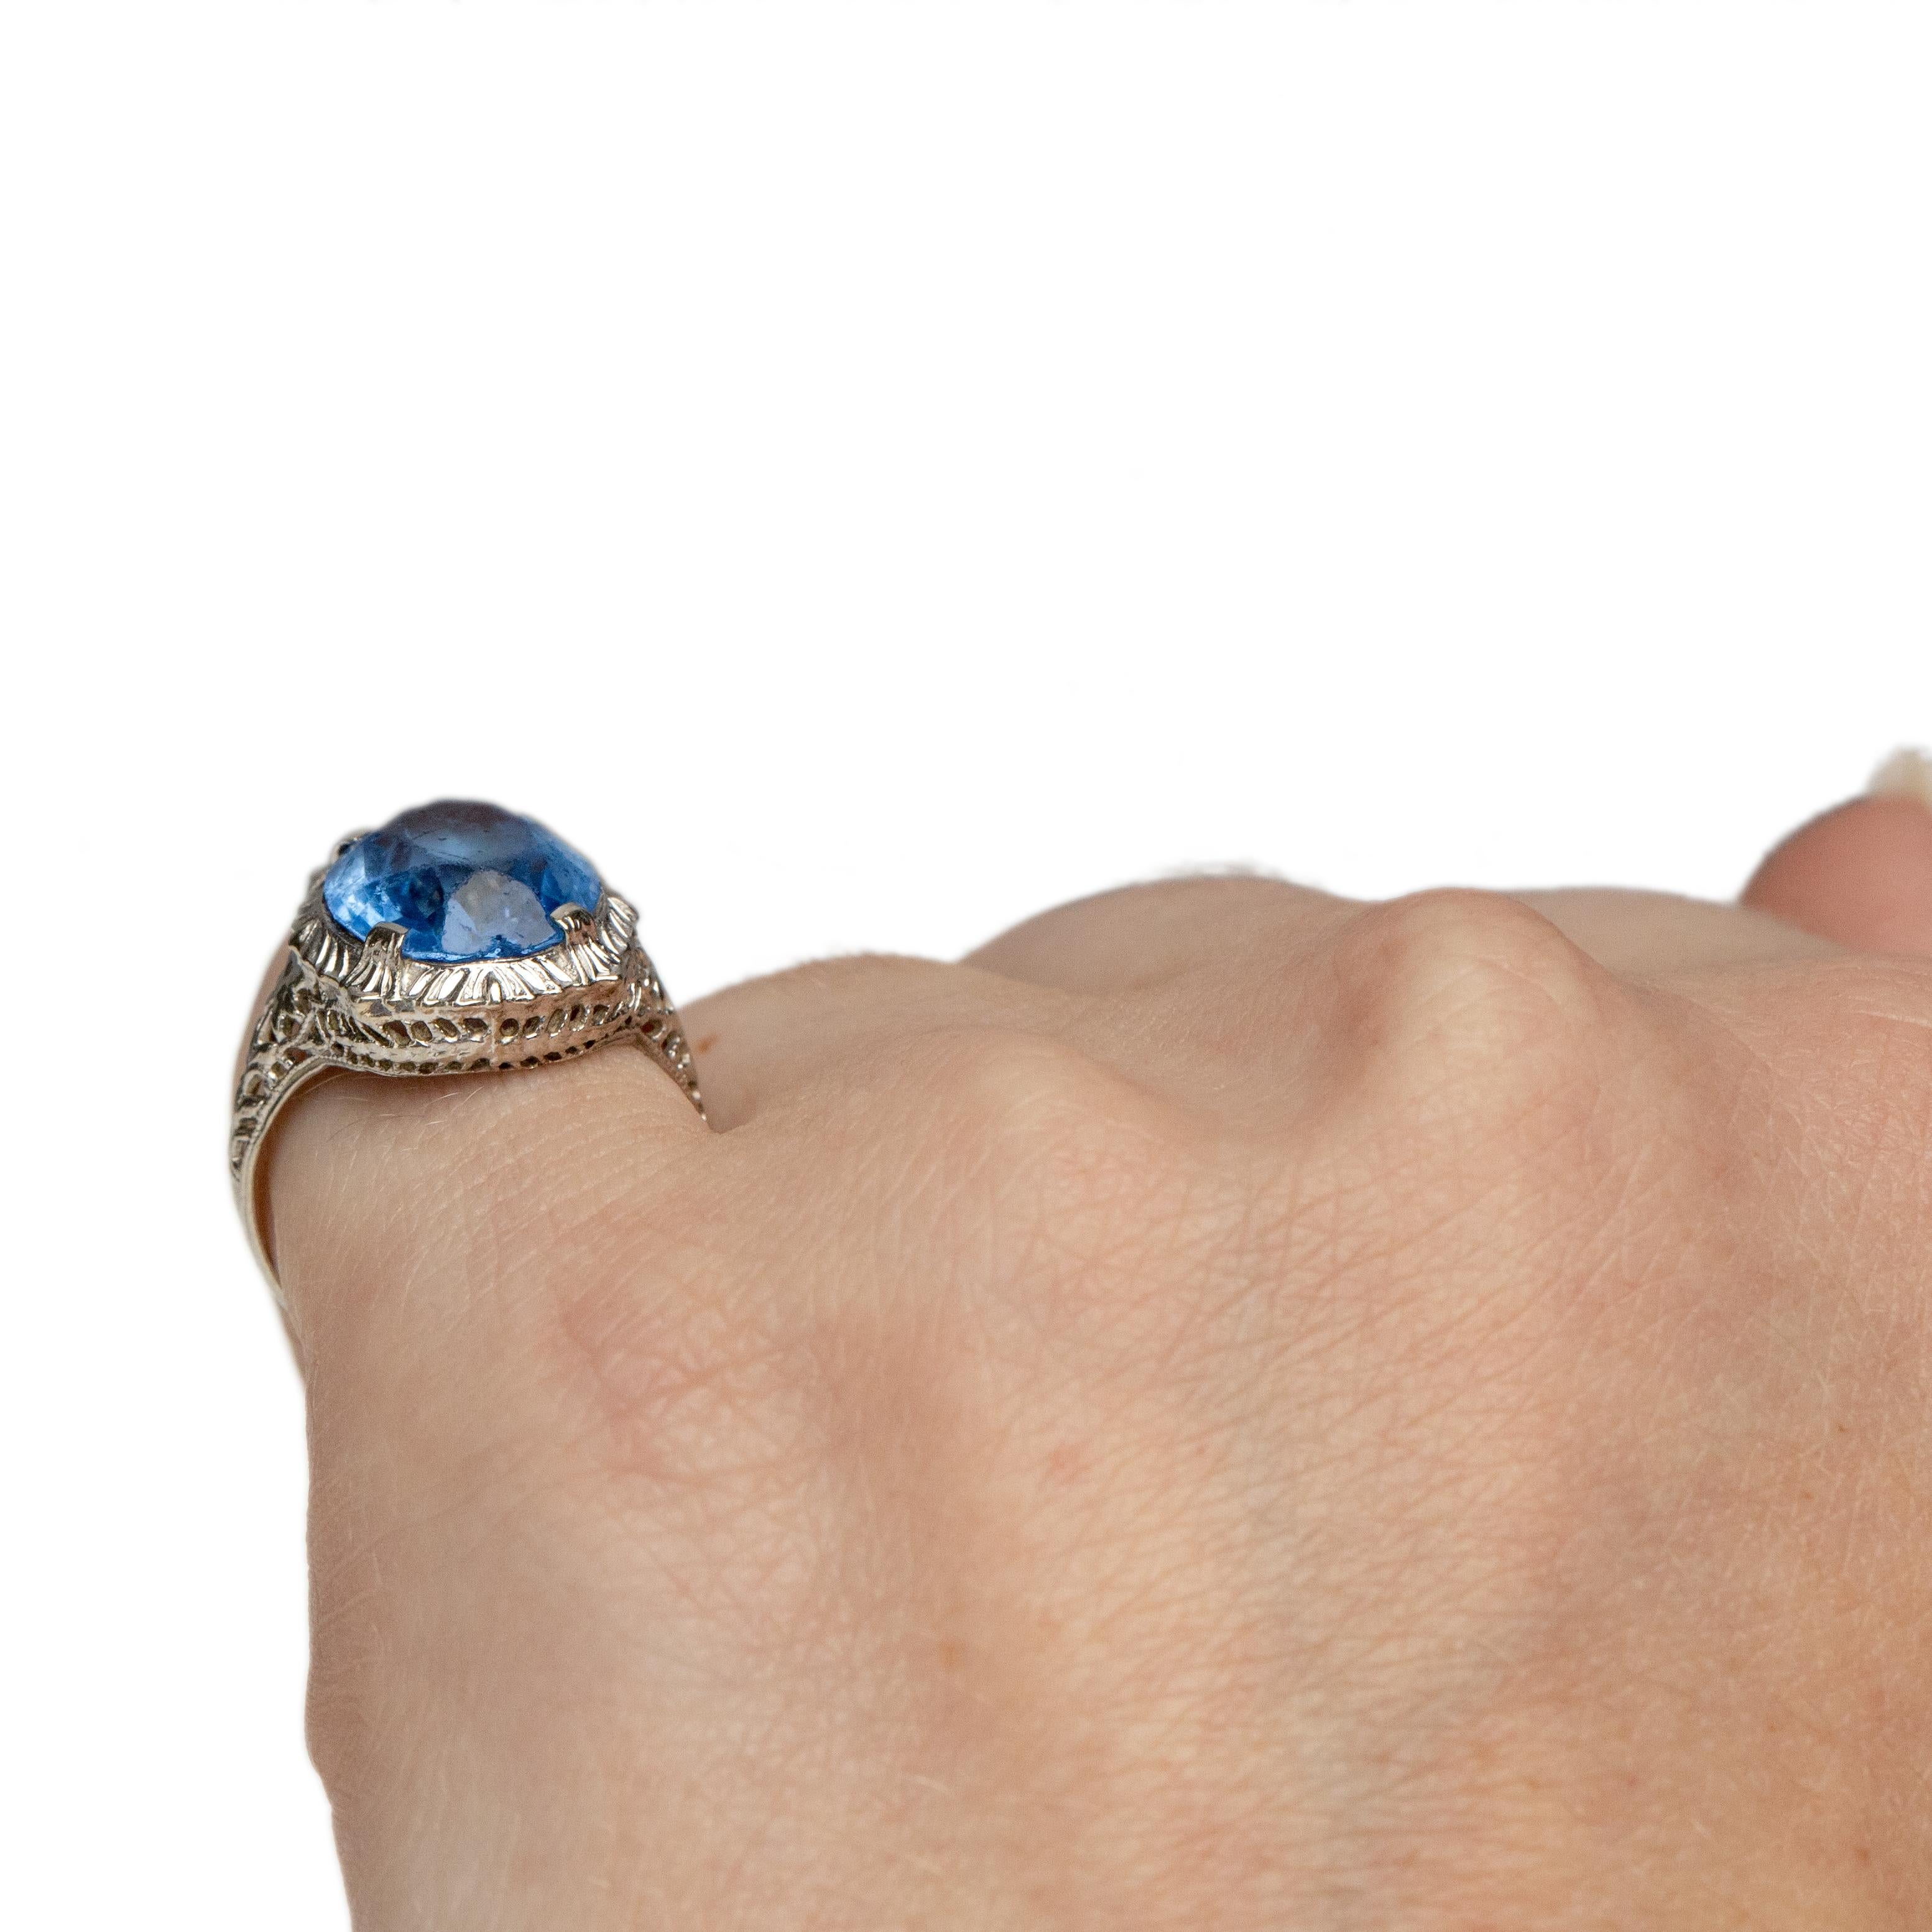 Circa 1920's 10K White Gold Vintage Filigree Blue Gem Fashion Ring 1